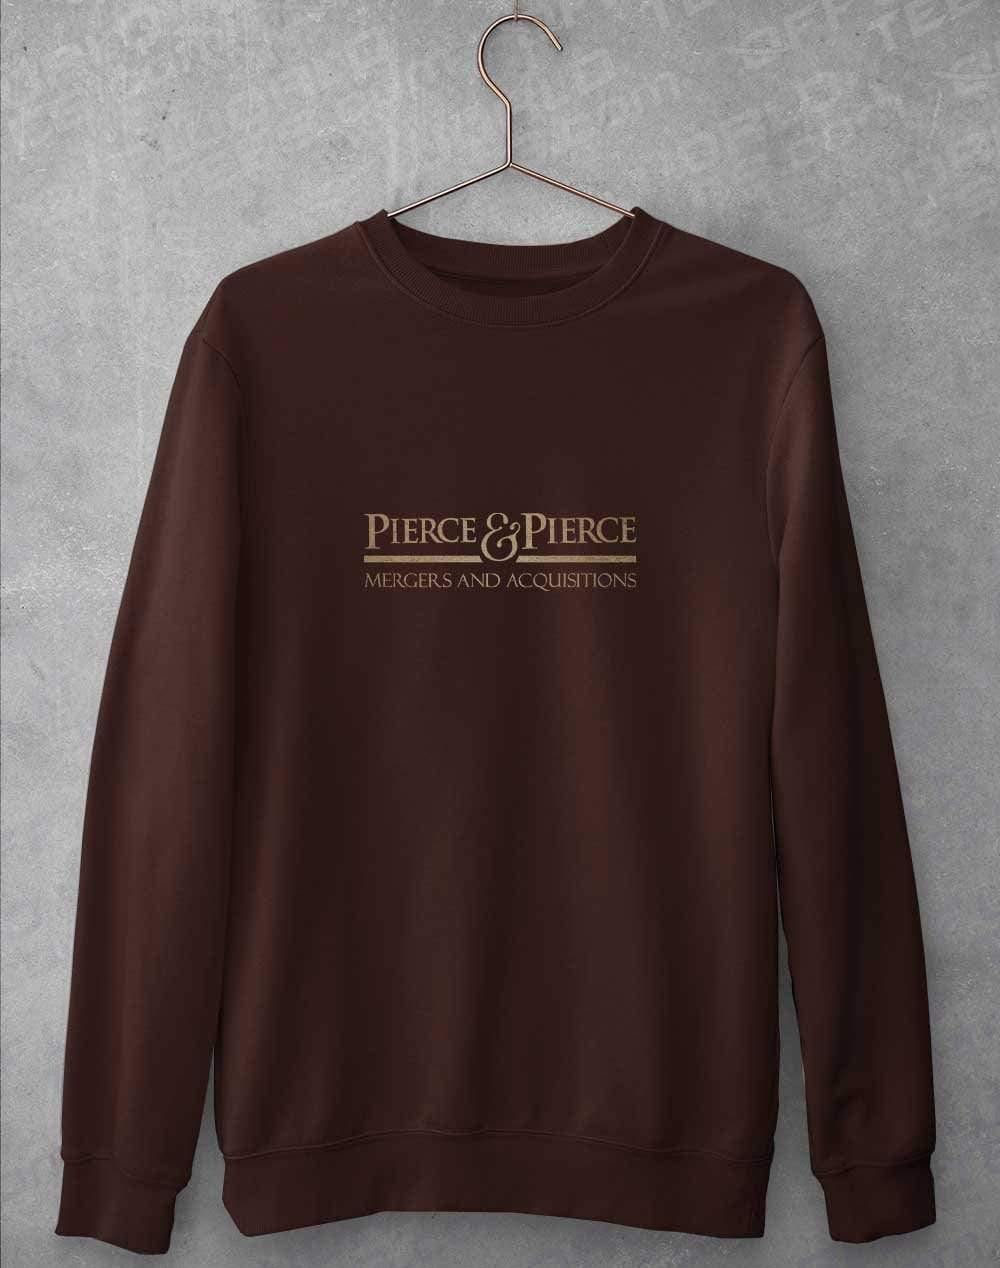 Pierce and Pierce Sweatshirt S / Hot Chocolate  - Off World Tees